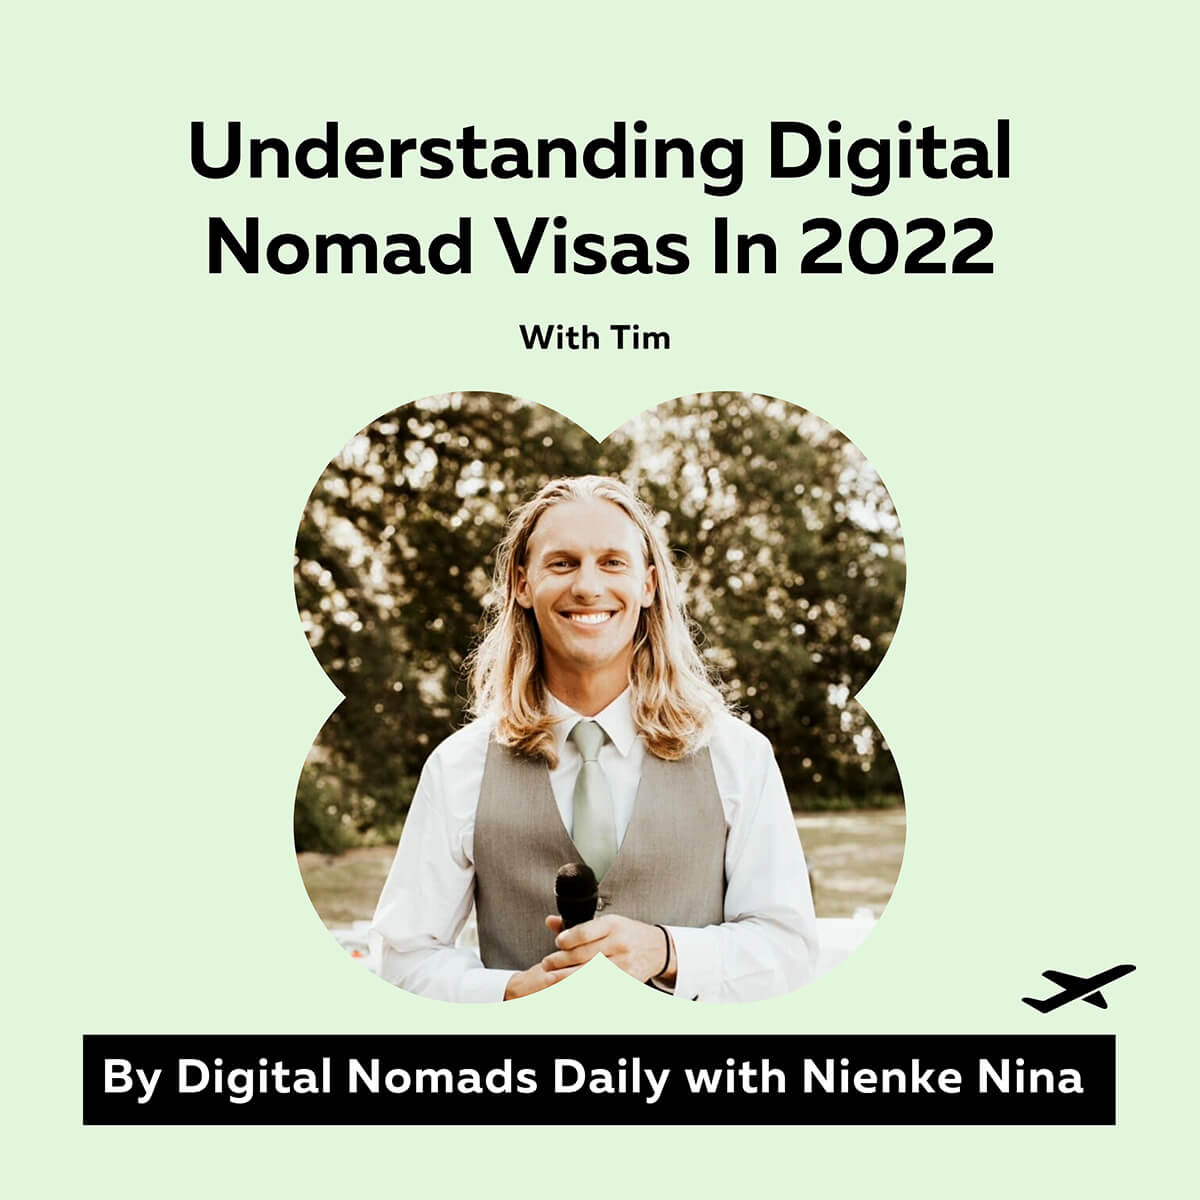 Understanding Digital Nomad Visas In 2022 With Tim